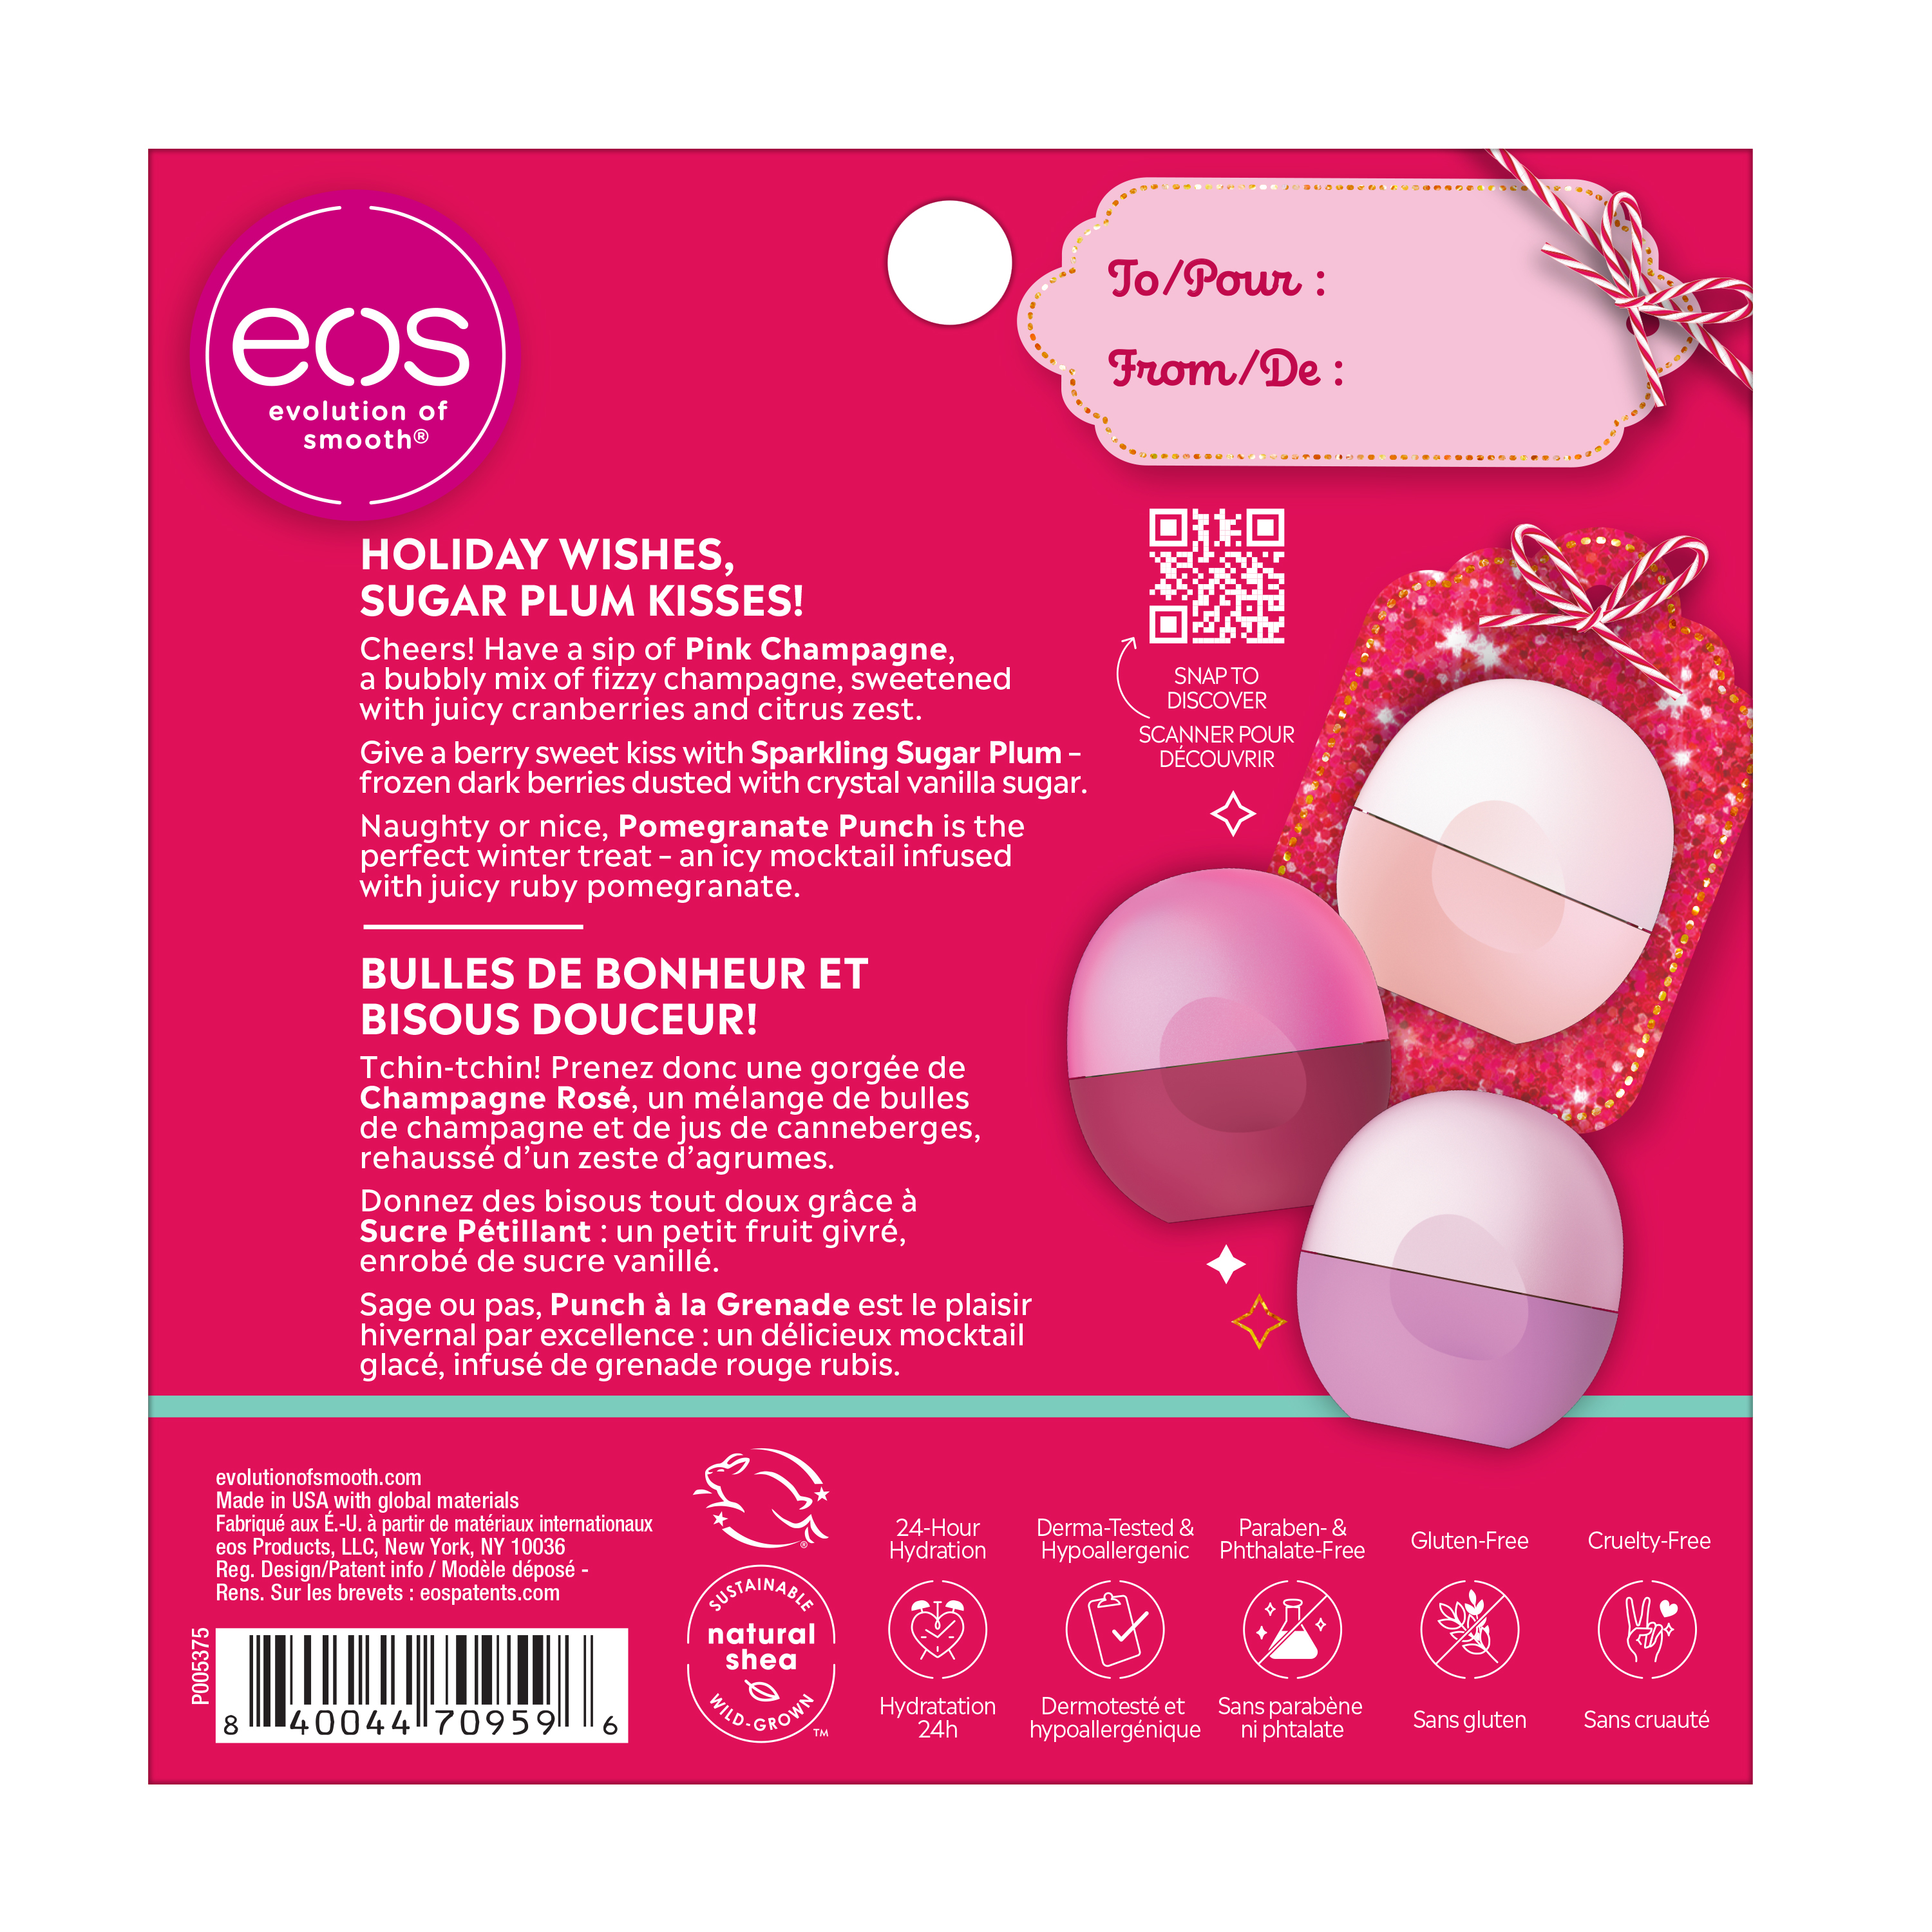 eos Holiday Lip Balm Trio - Pink Champagne, Sparkling Sugar Plum, & Pomegranate Punch, 0.25 oz/3pk - image 3 of 5